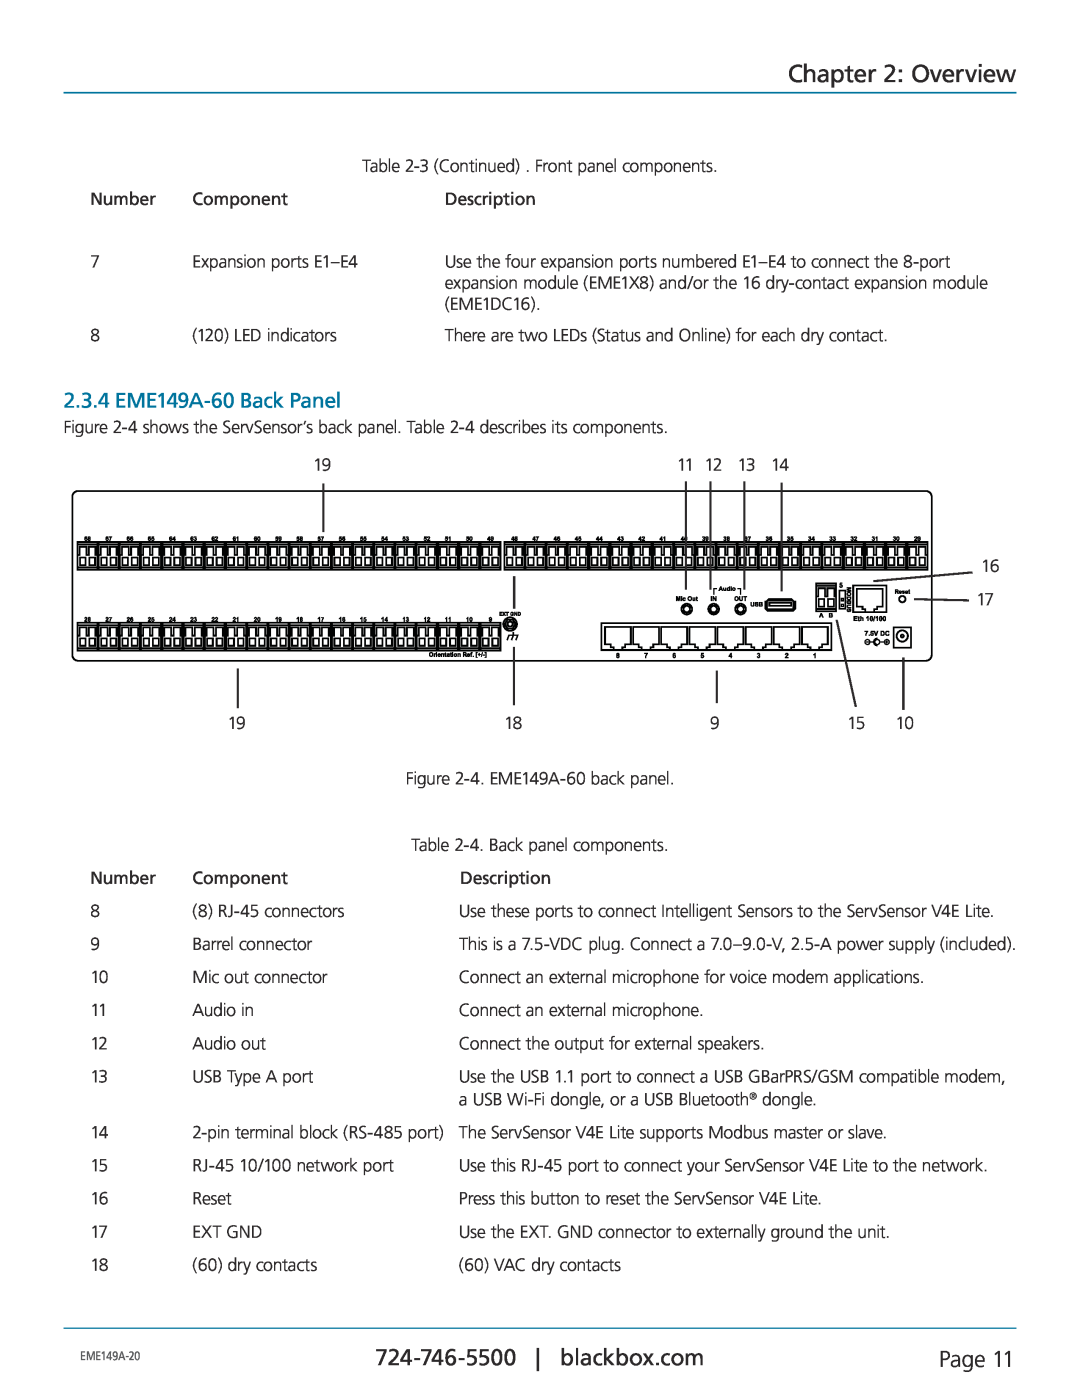 Black Box EME149D-20, EME149D-60, EME149A-20 manual EME149A-60 Back Panel, Overview, Page 